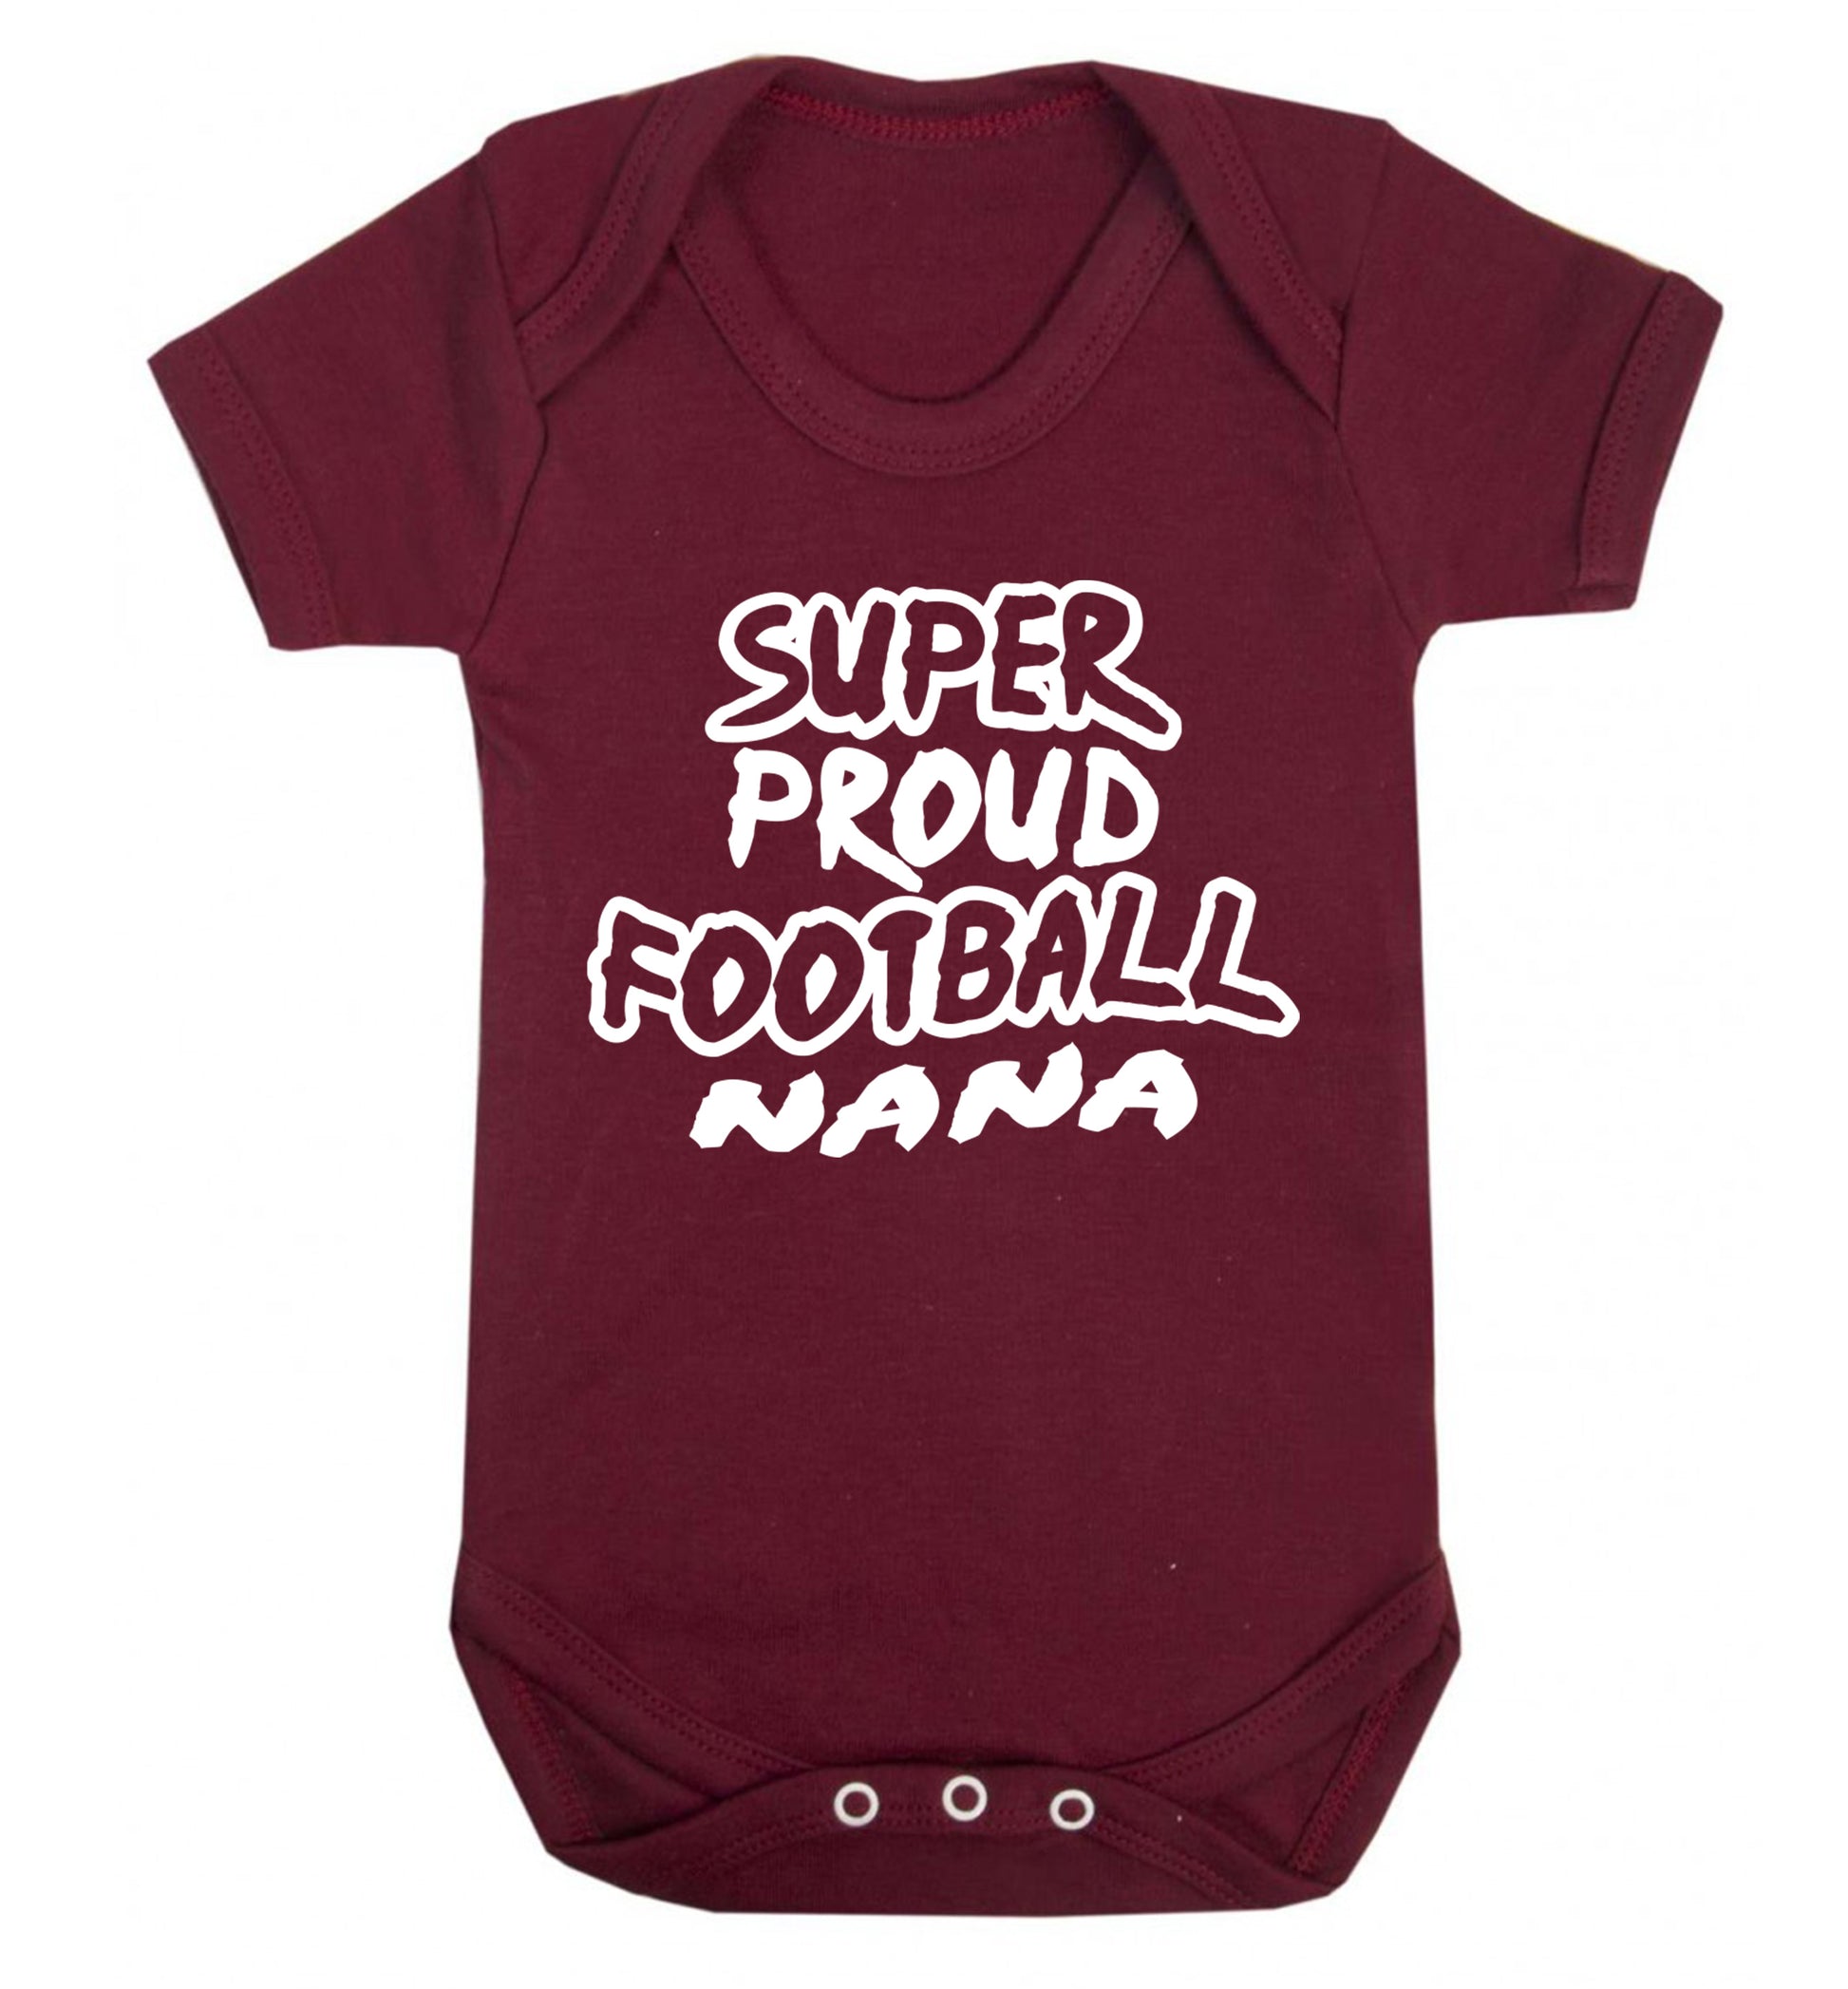 Super proud football nana Baby Vest maroon 18-24 months